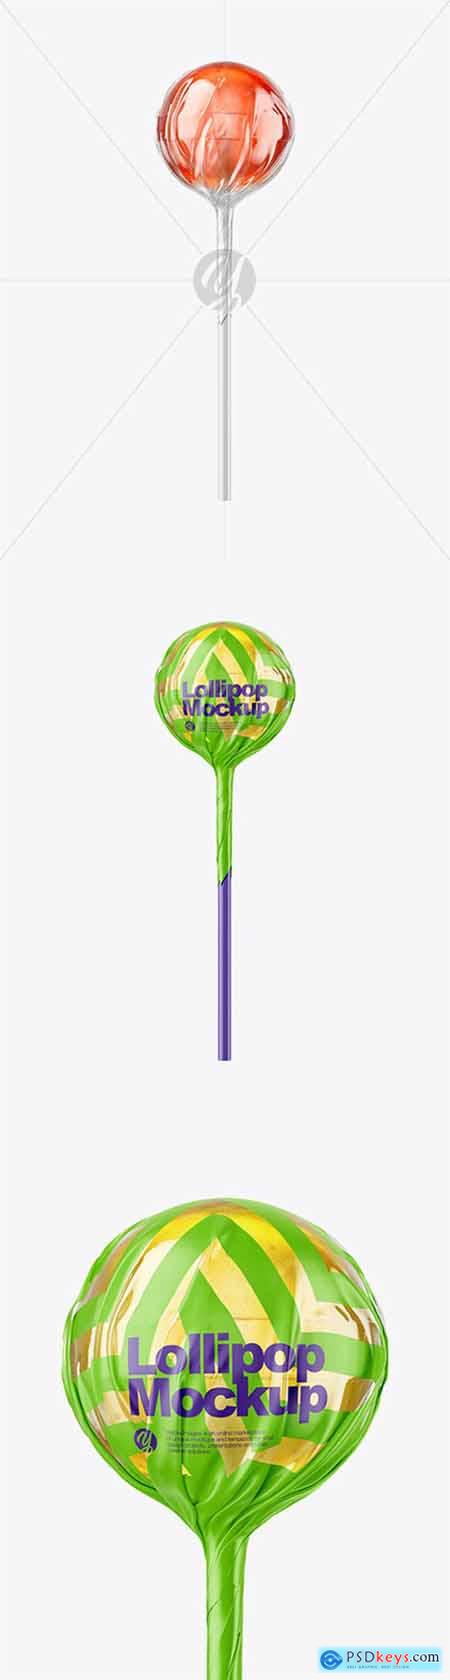 Download Ball Lollipop Mockup 60094 Free Download Photoshop Vector Stock Image Via Torrent Zippyshare From Psdkeys Com